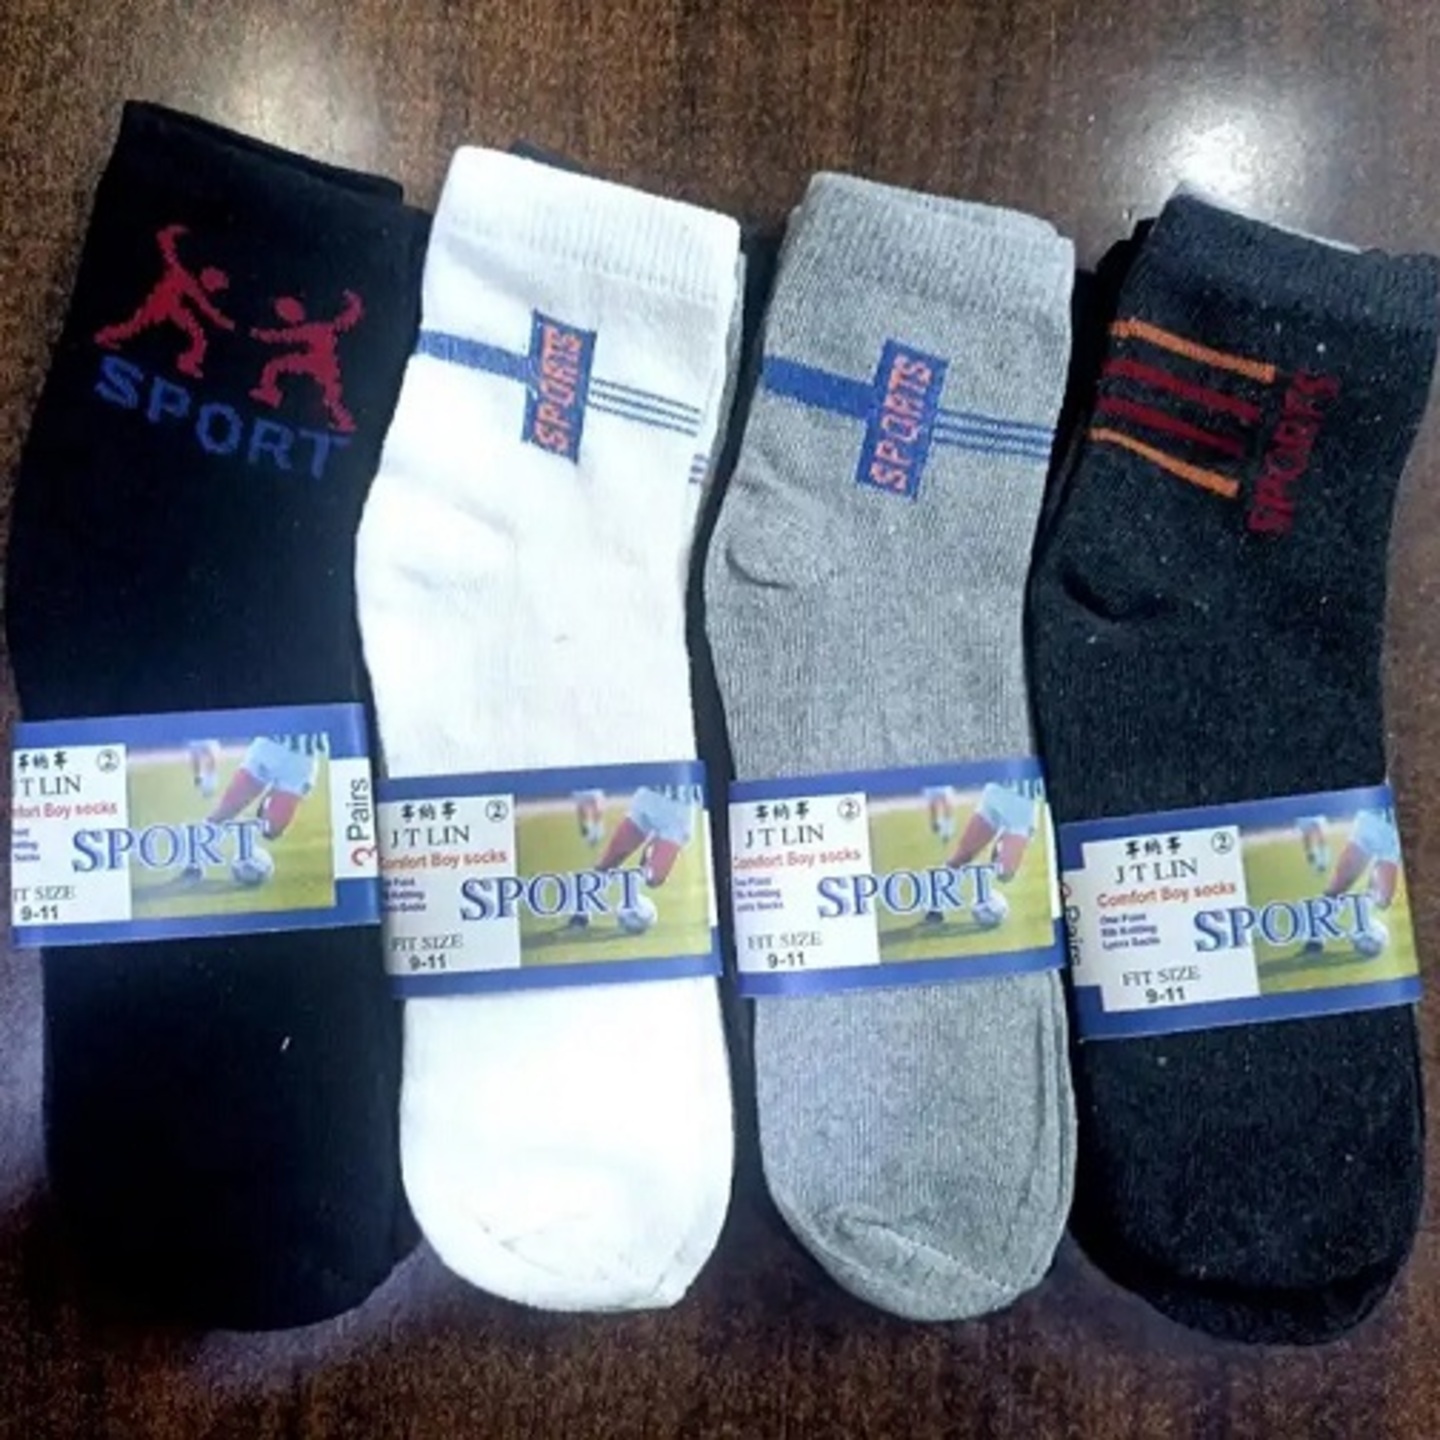 JT LIN Comfort Socks (Pack of 3 pairs)